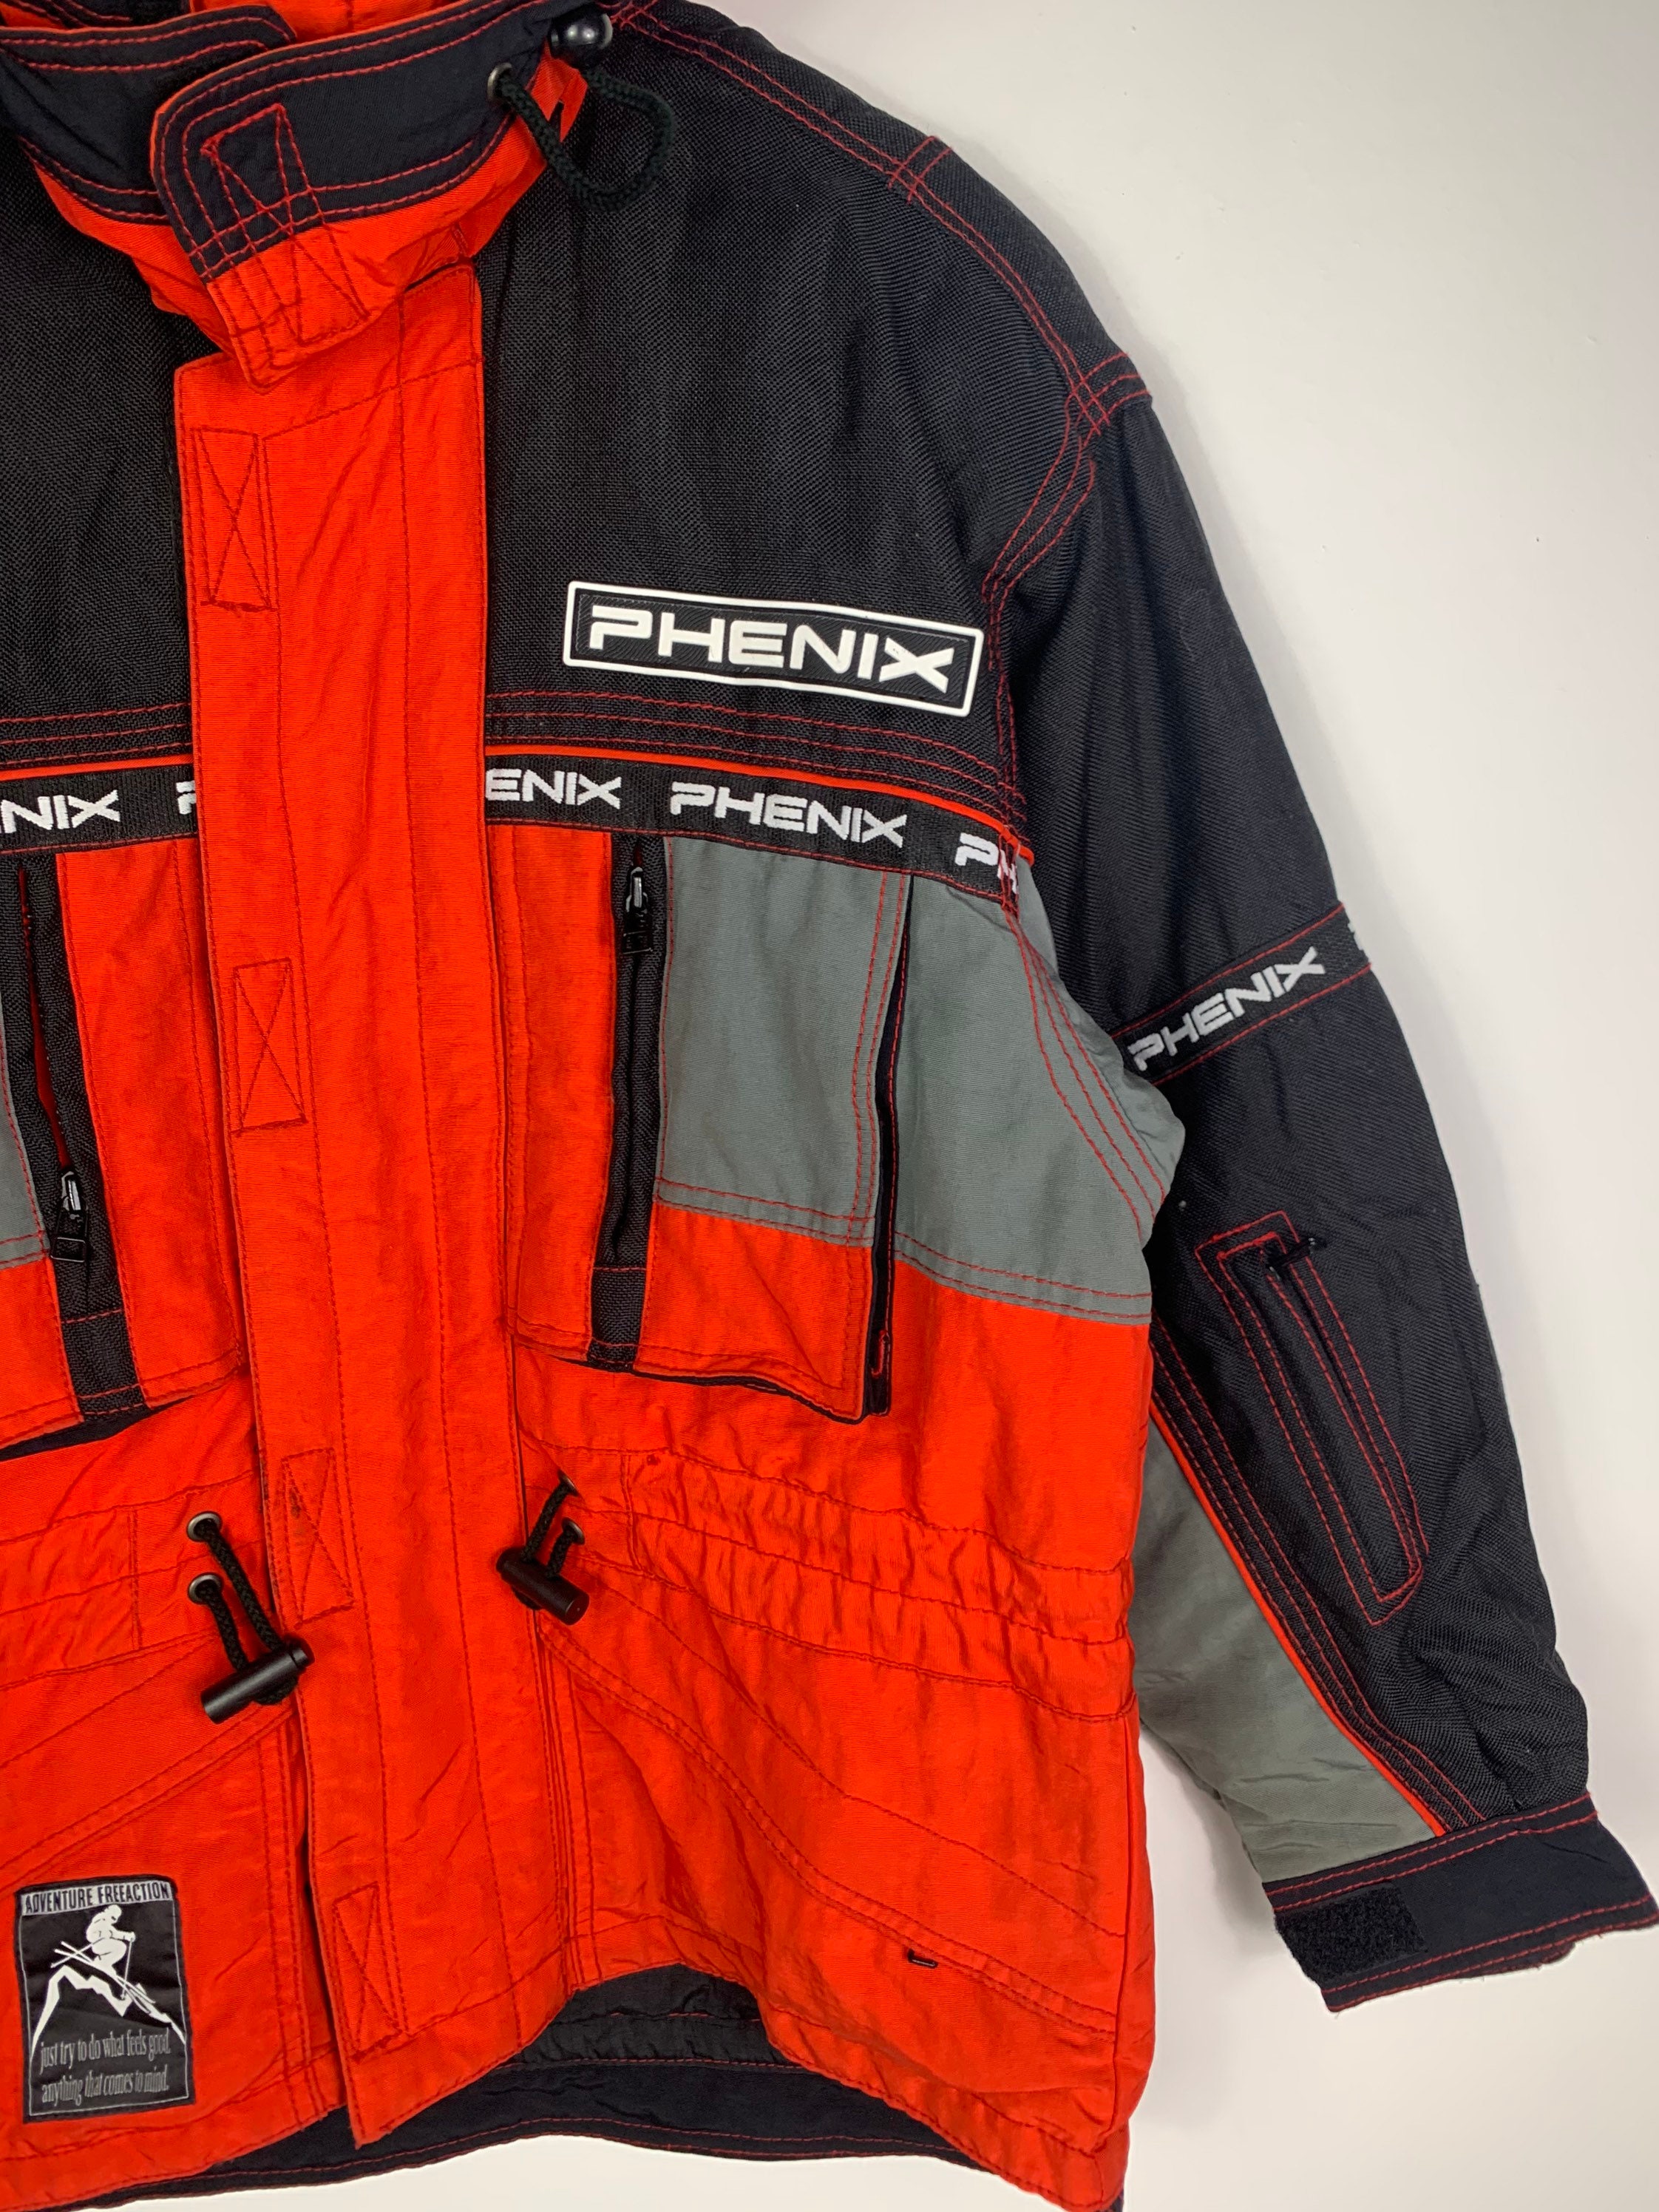 Vintage Phenix Ski Jacket Striking Color Japanese Brand Ski - Etsy UK